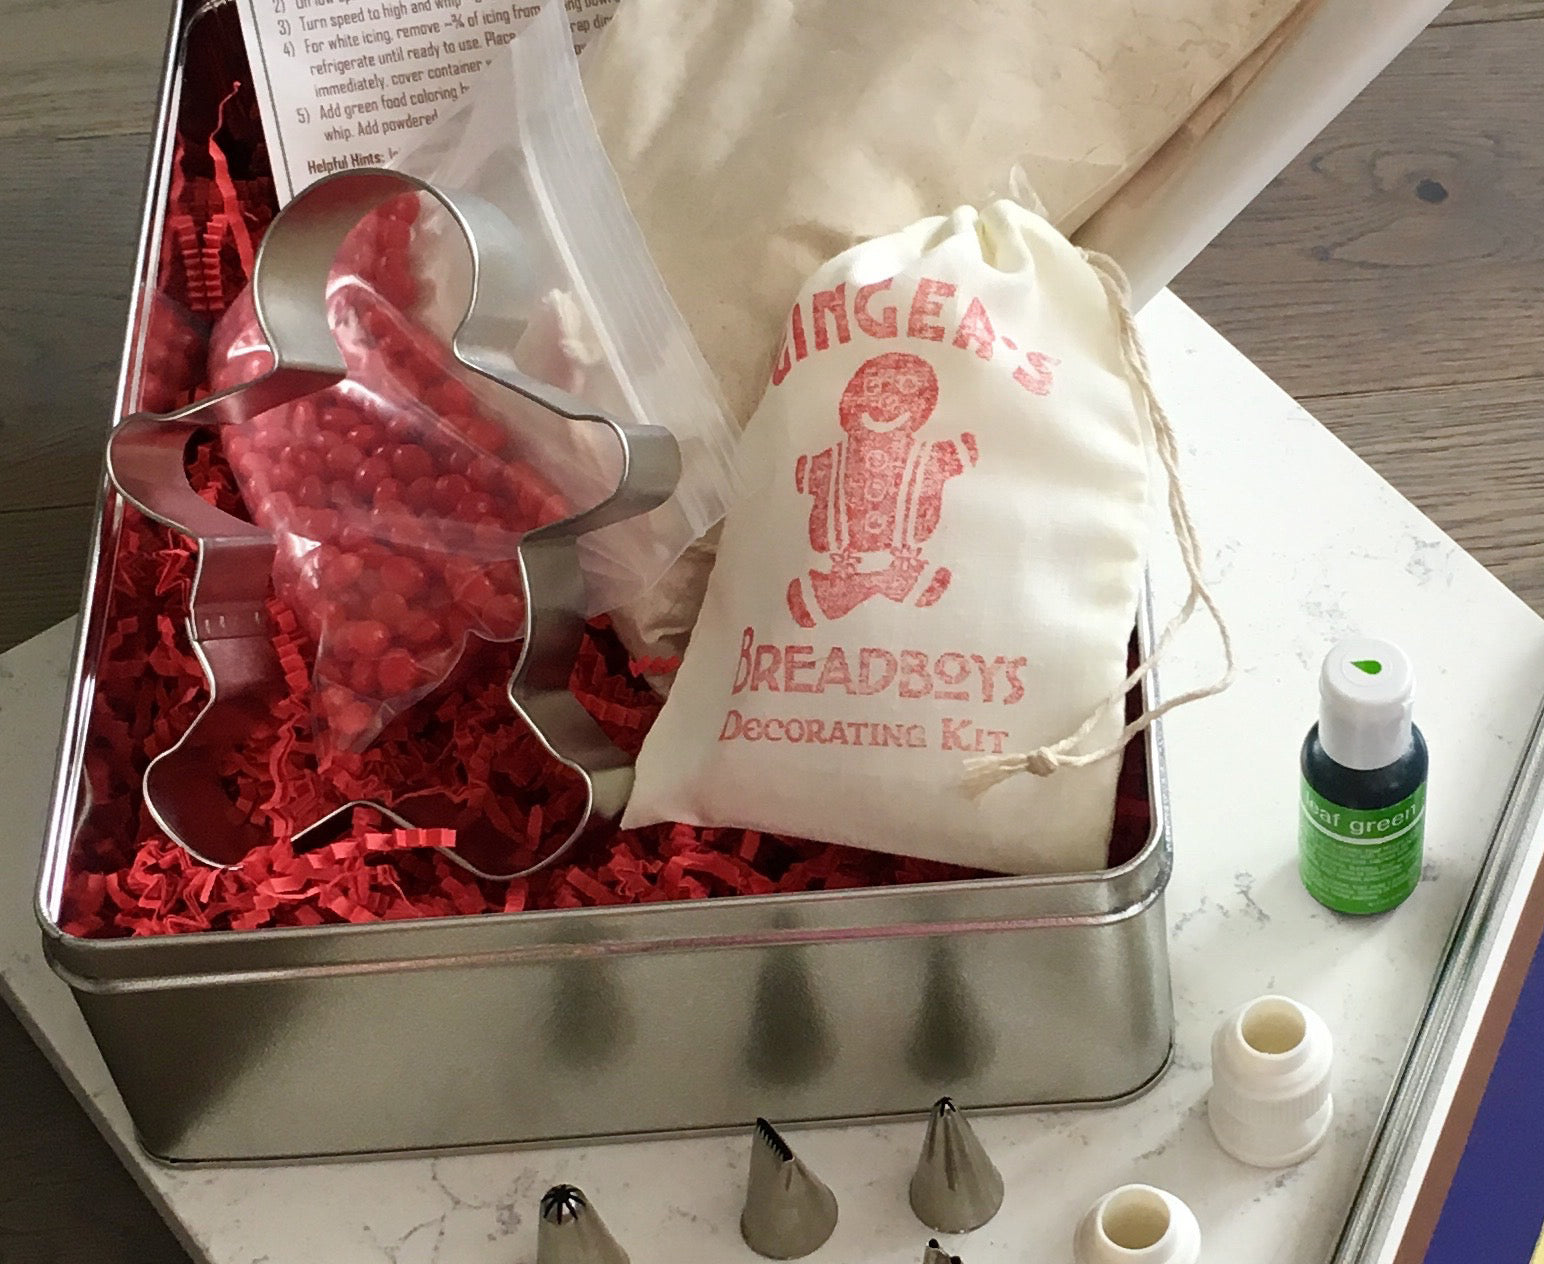 Decorating Kit | Ginger's Breadboys | Gingerbread Man Baking Kits